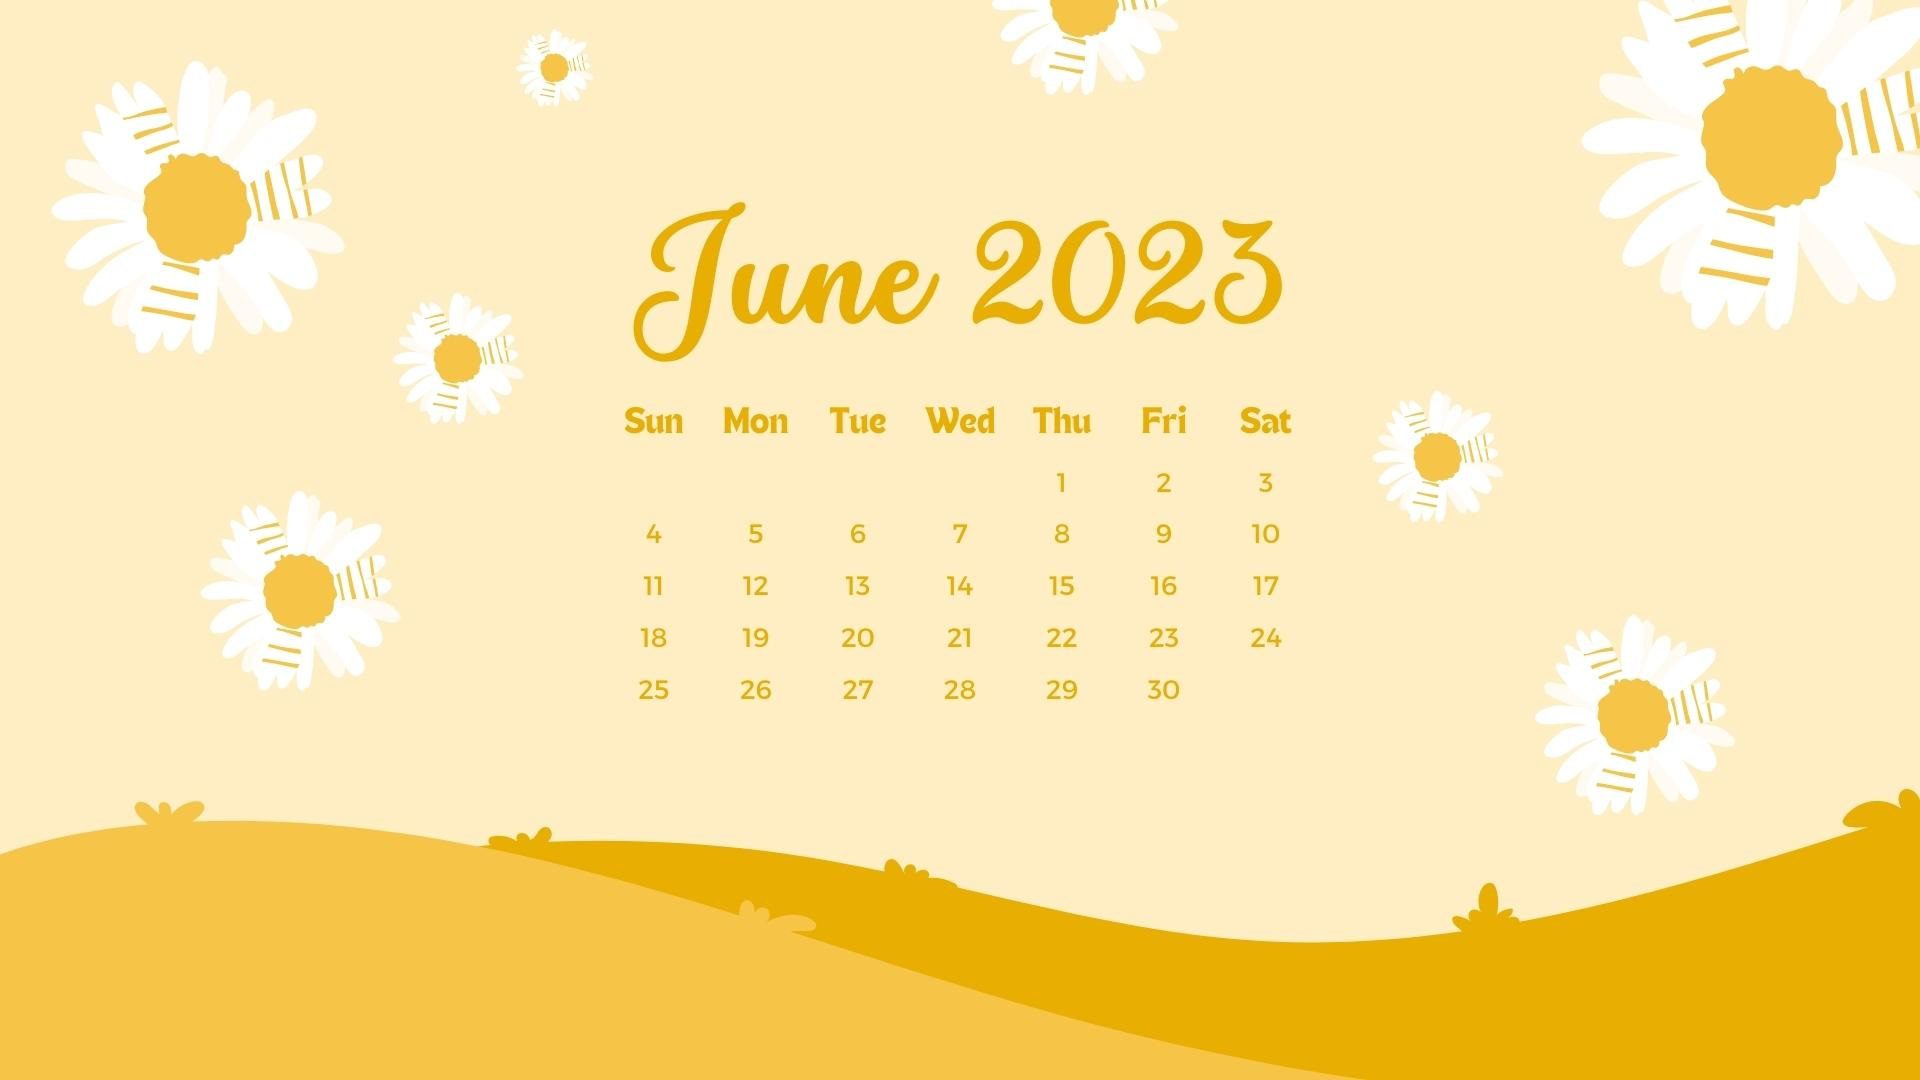 June 2023 Calendar Wallpapers HD Free Download